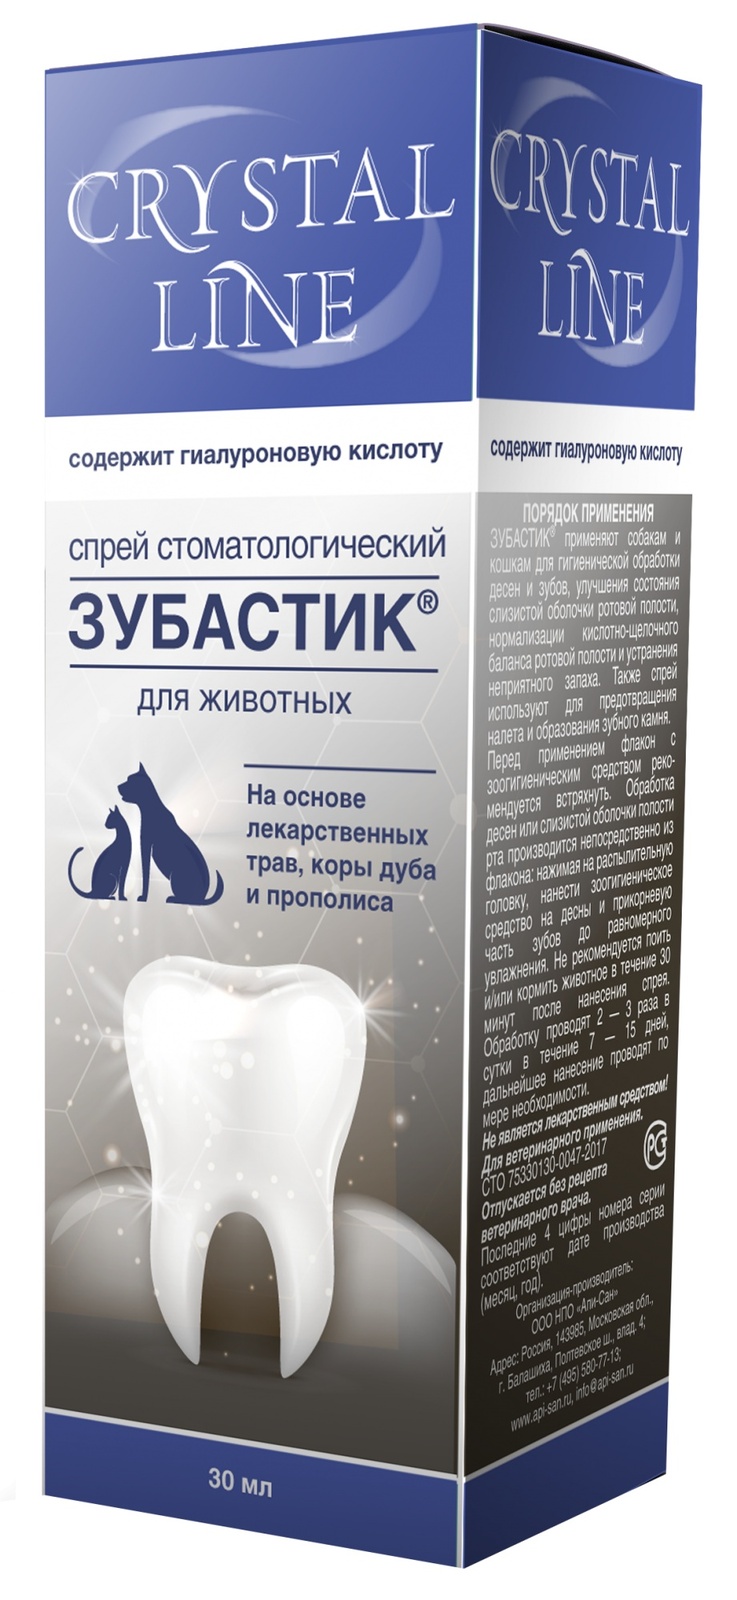 Apicenna Apicenna зубастик спрей для чистки зубов Crystal line (30 г)